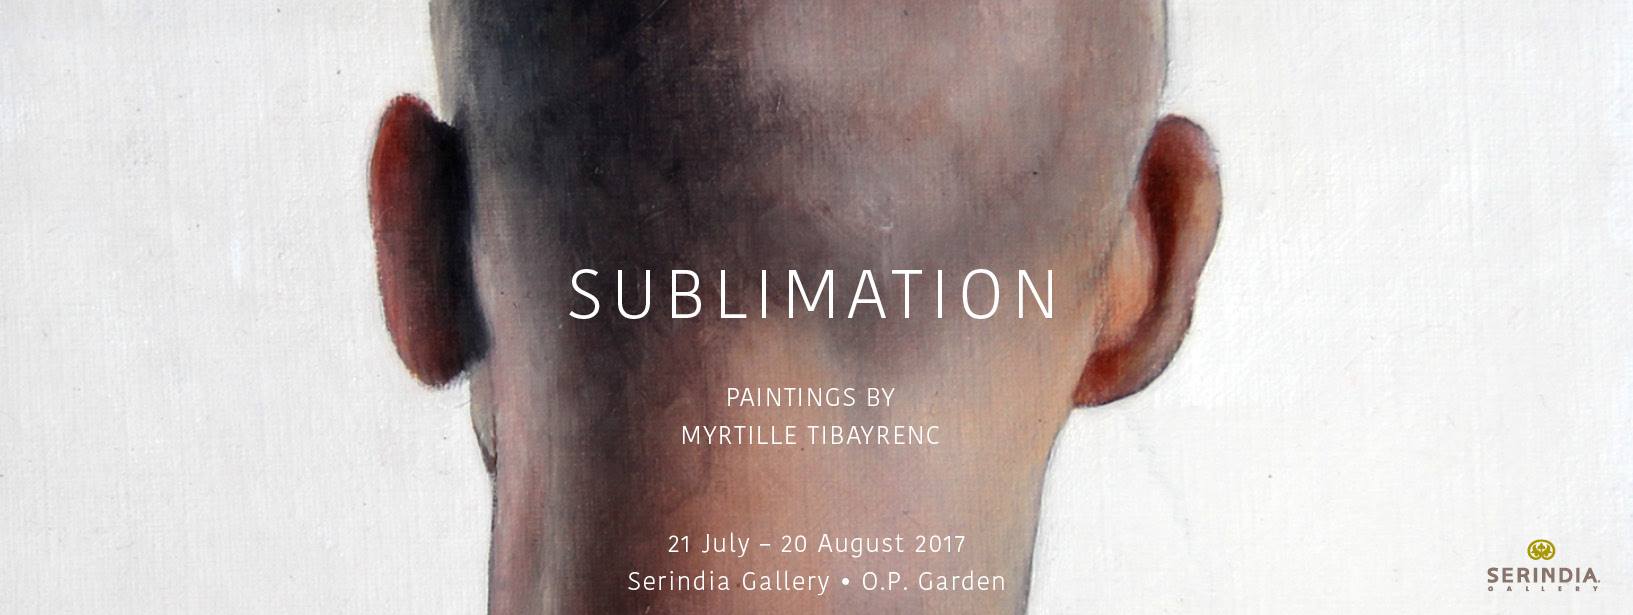 Sublimation  Paintings by Myrtille Tibayrenc